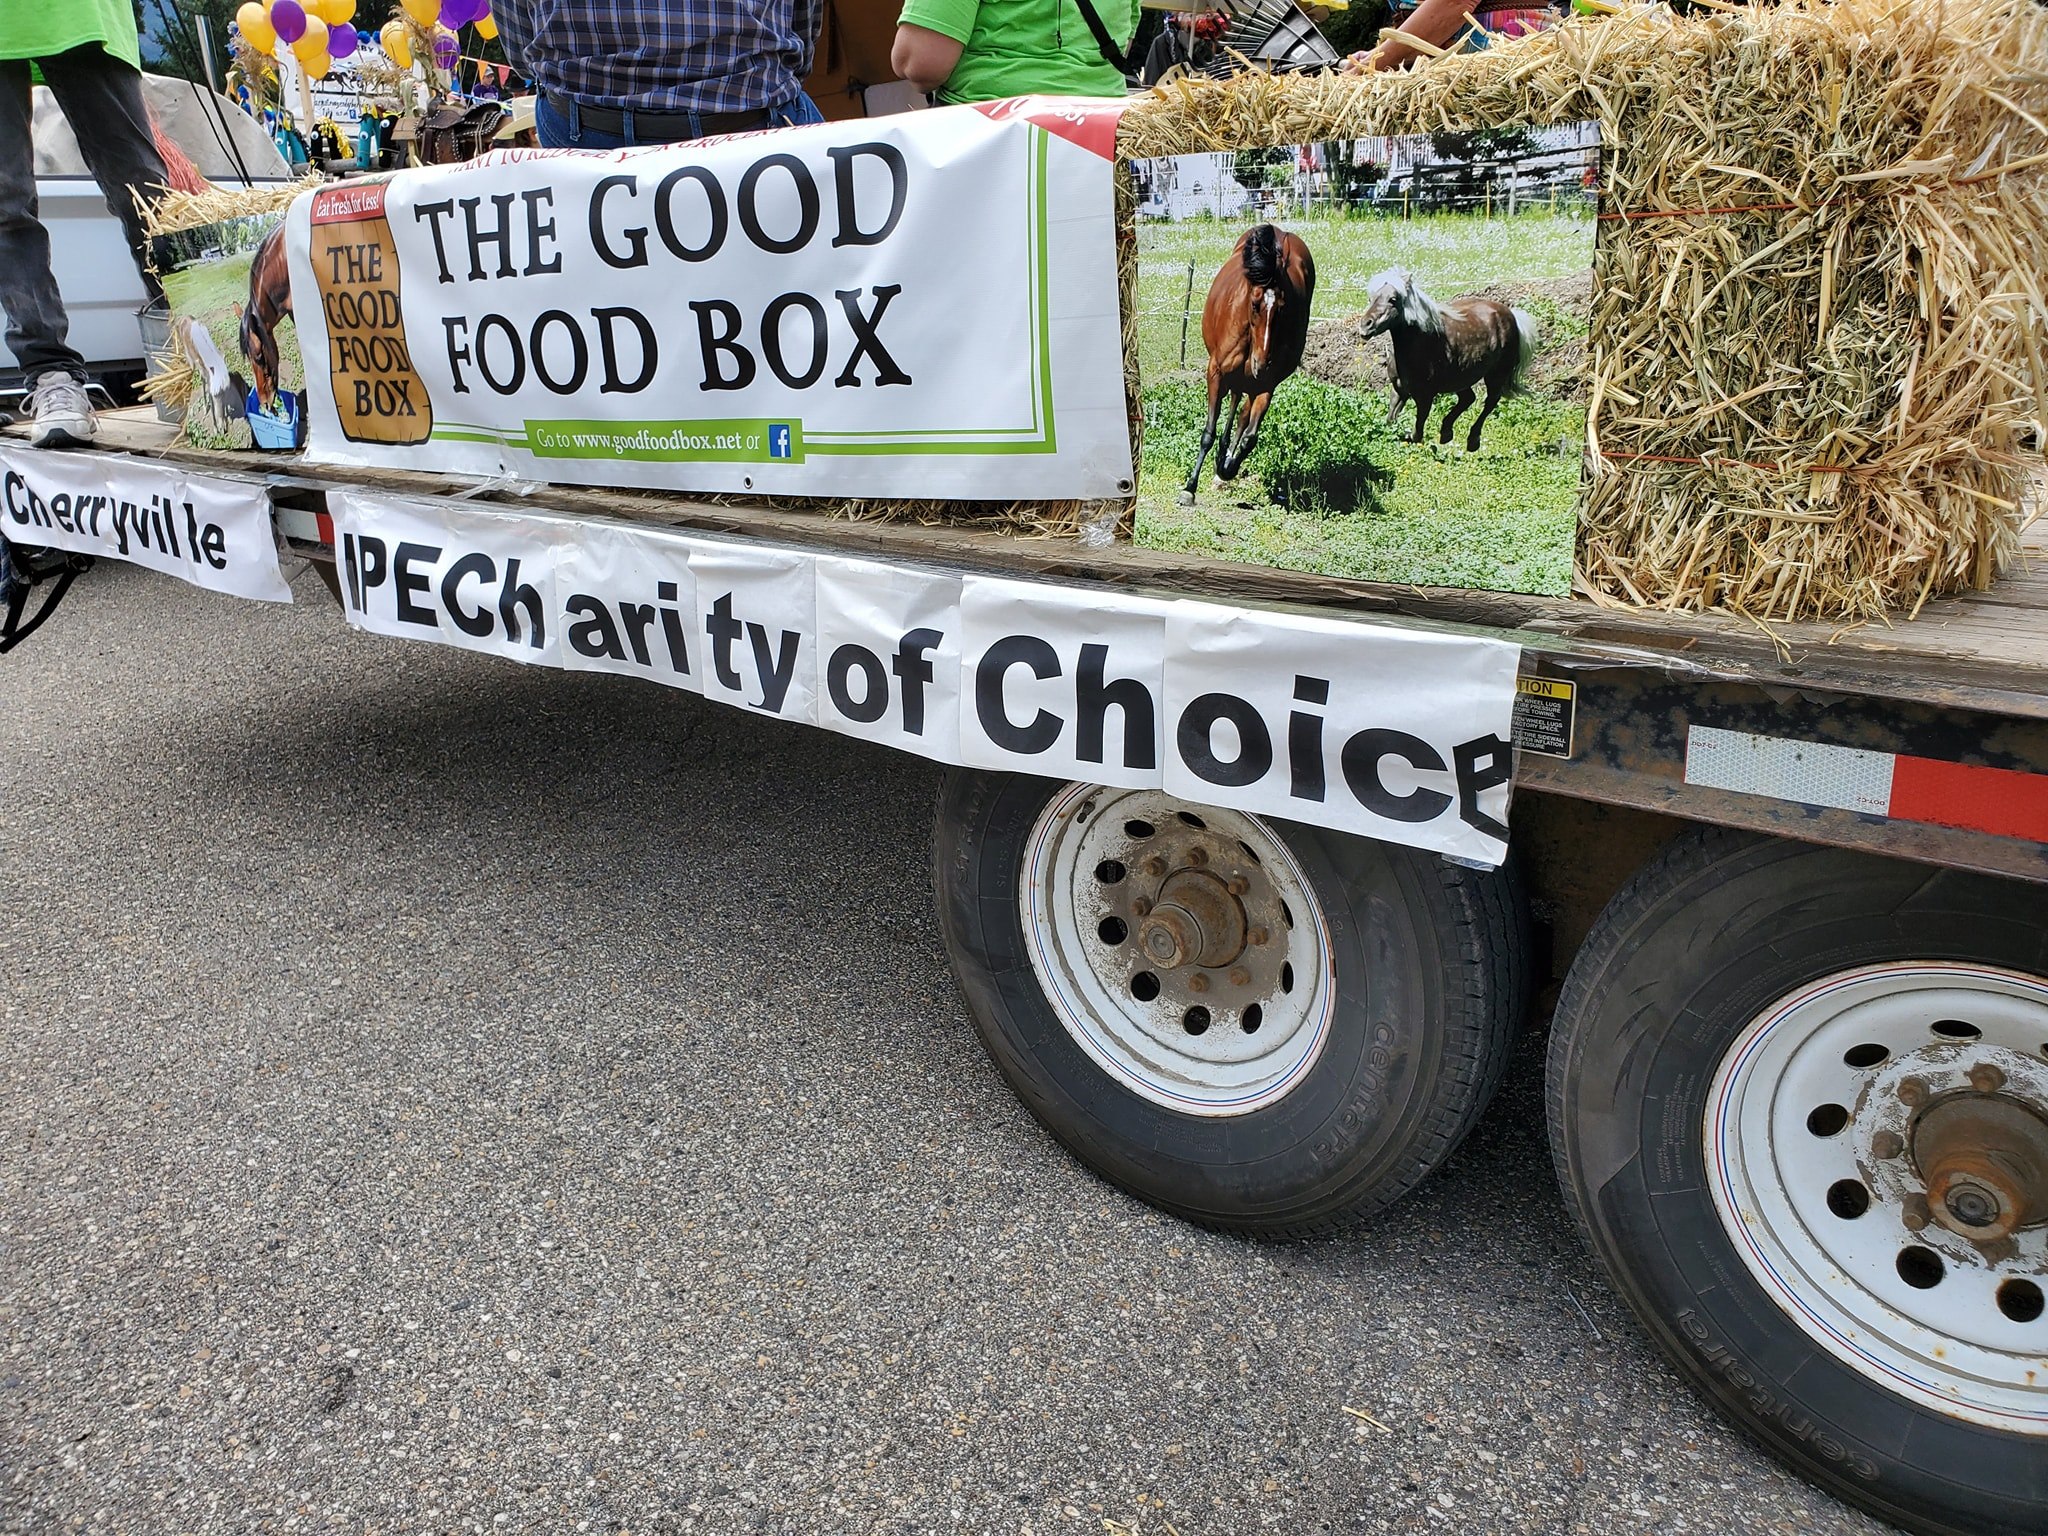 Charity of Choice The Good Food Box